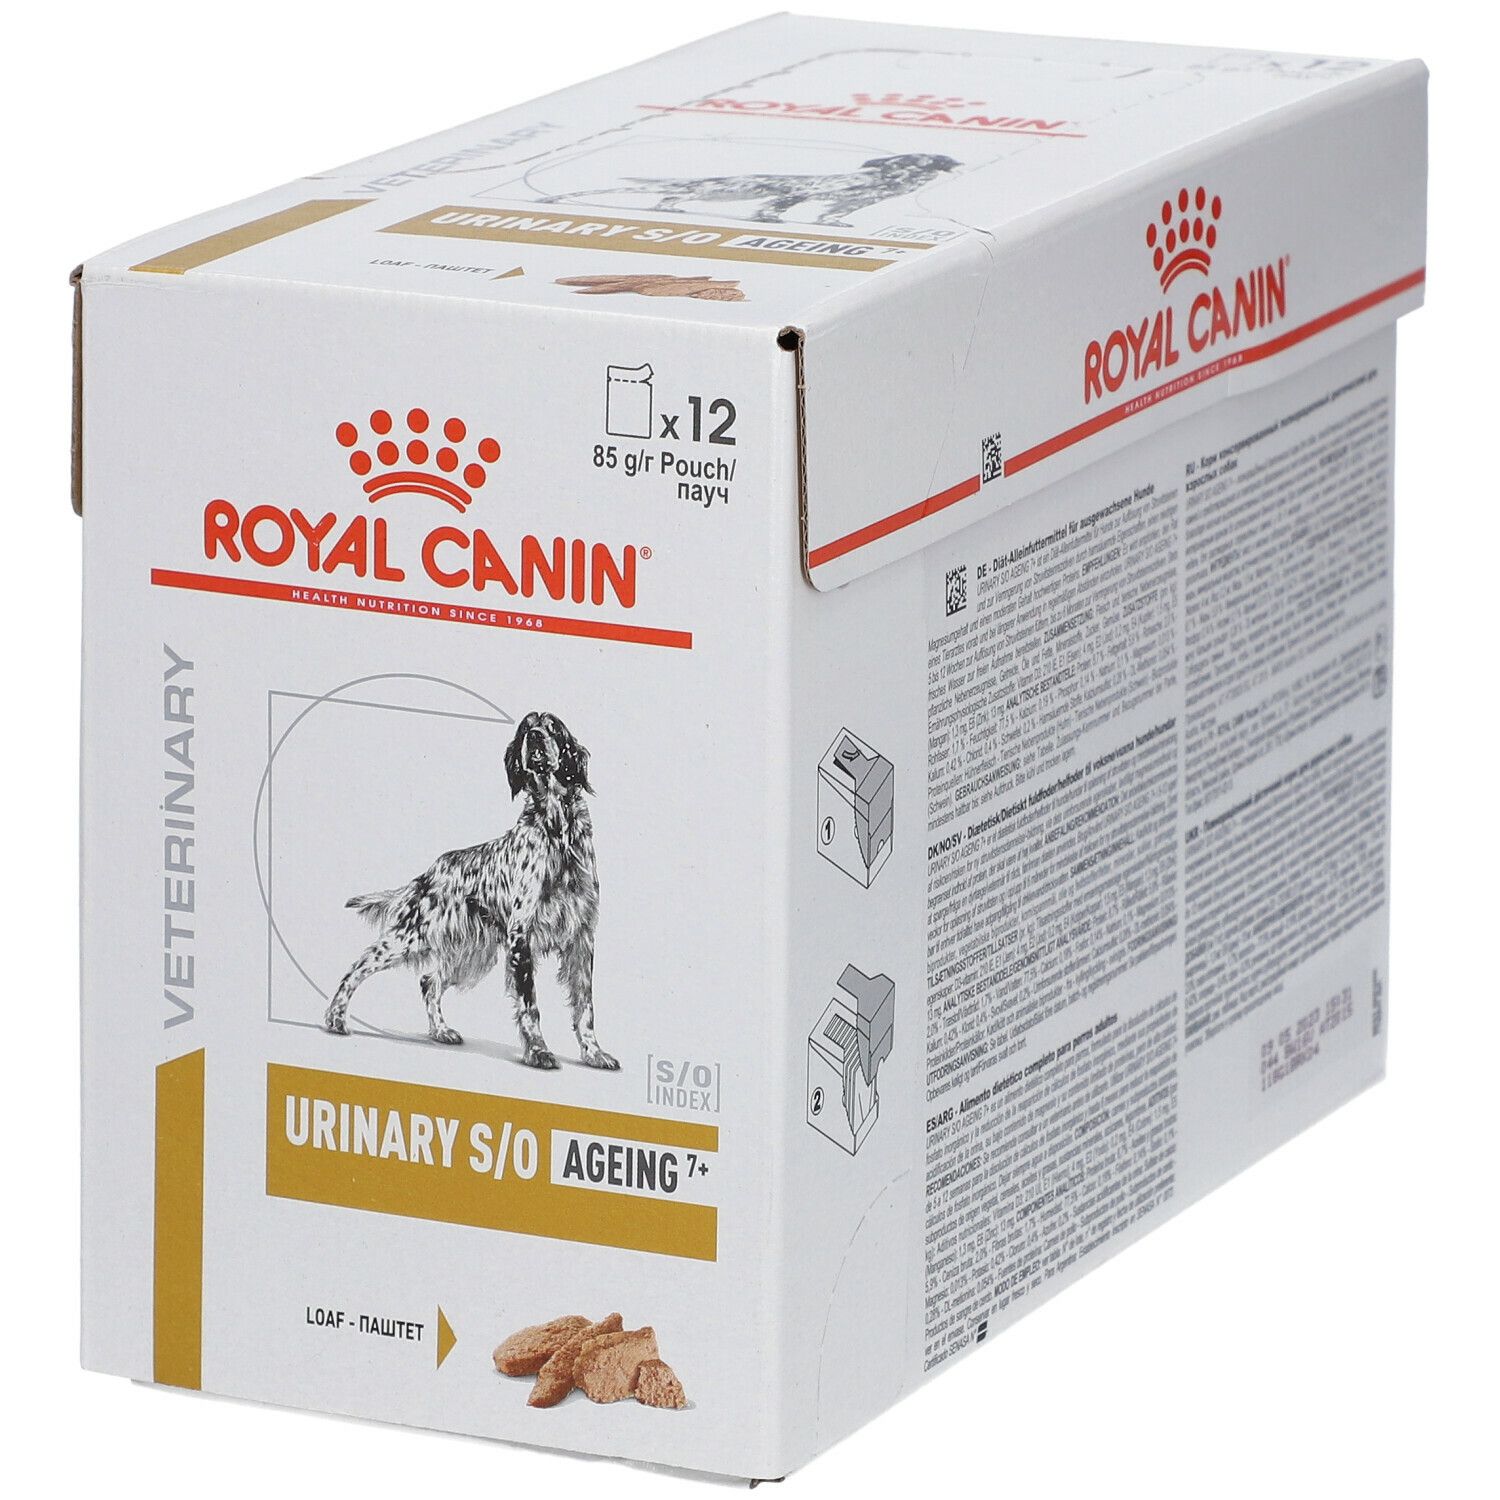 ROYAL CANIN Veterinary Urinary S/O Ageing 7+